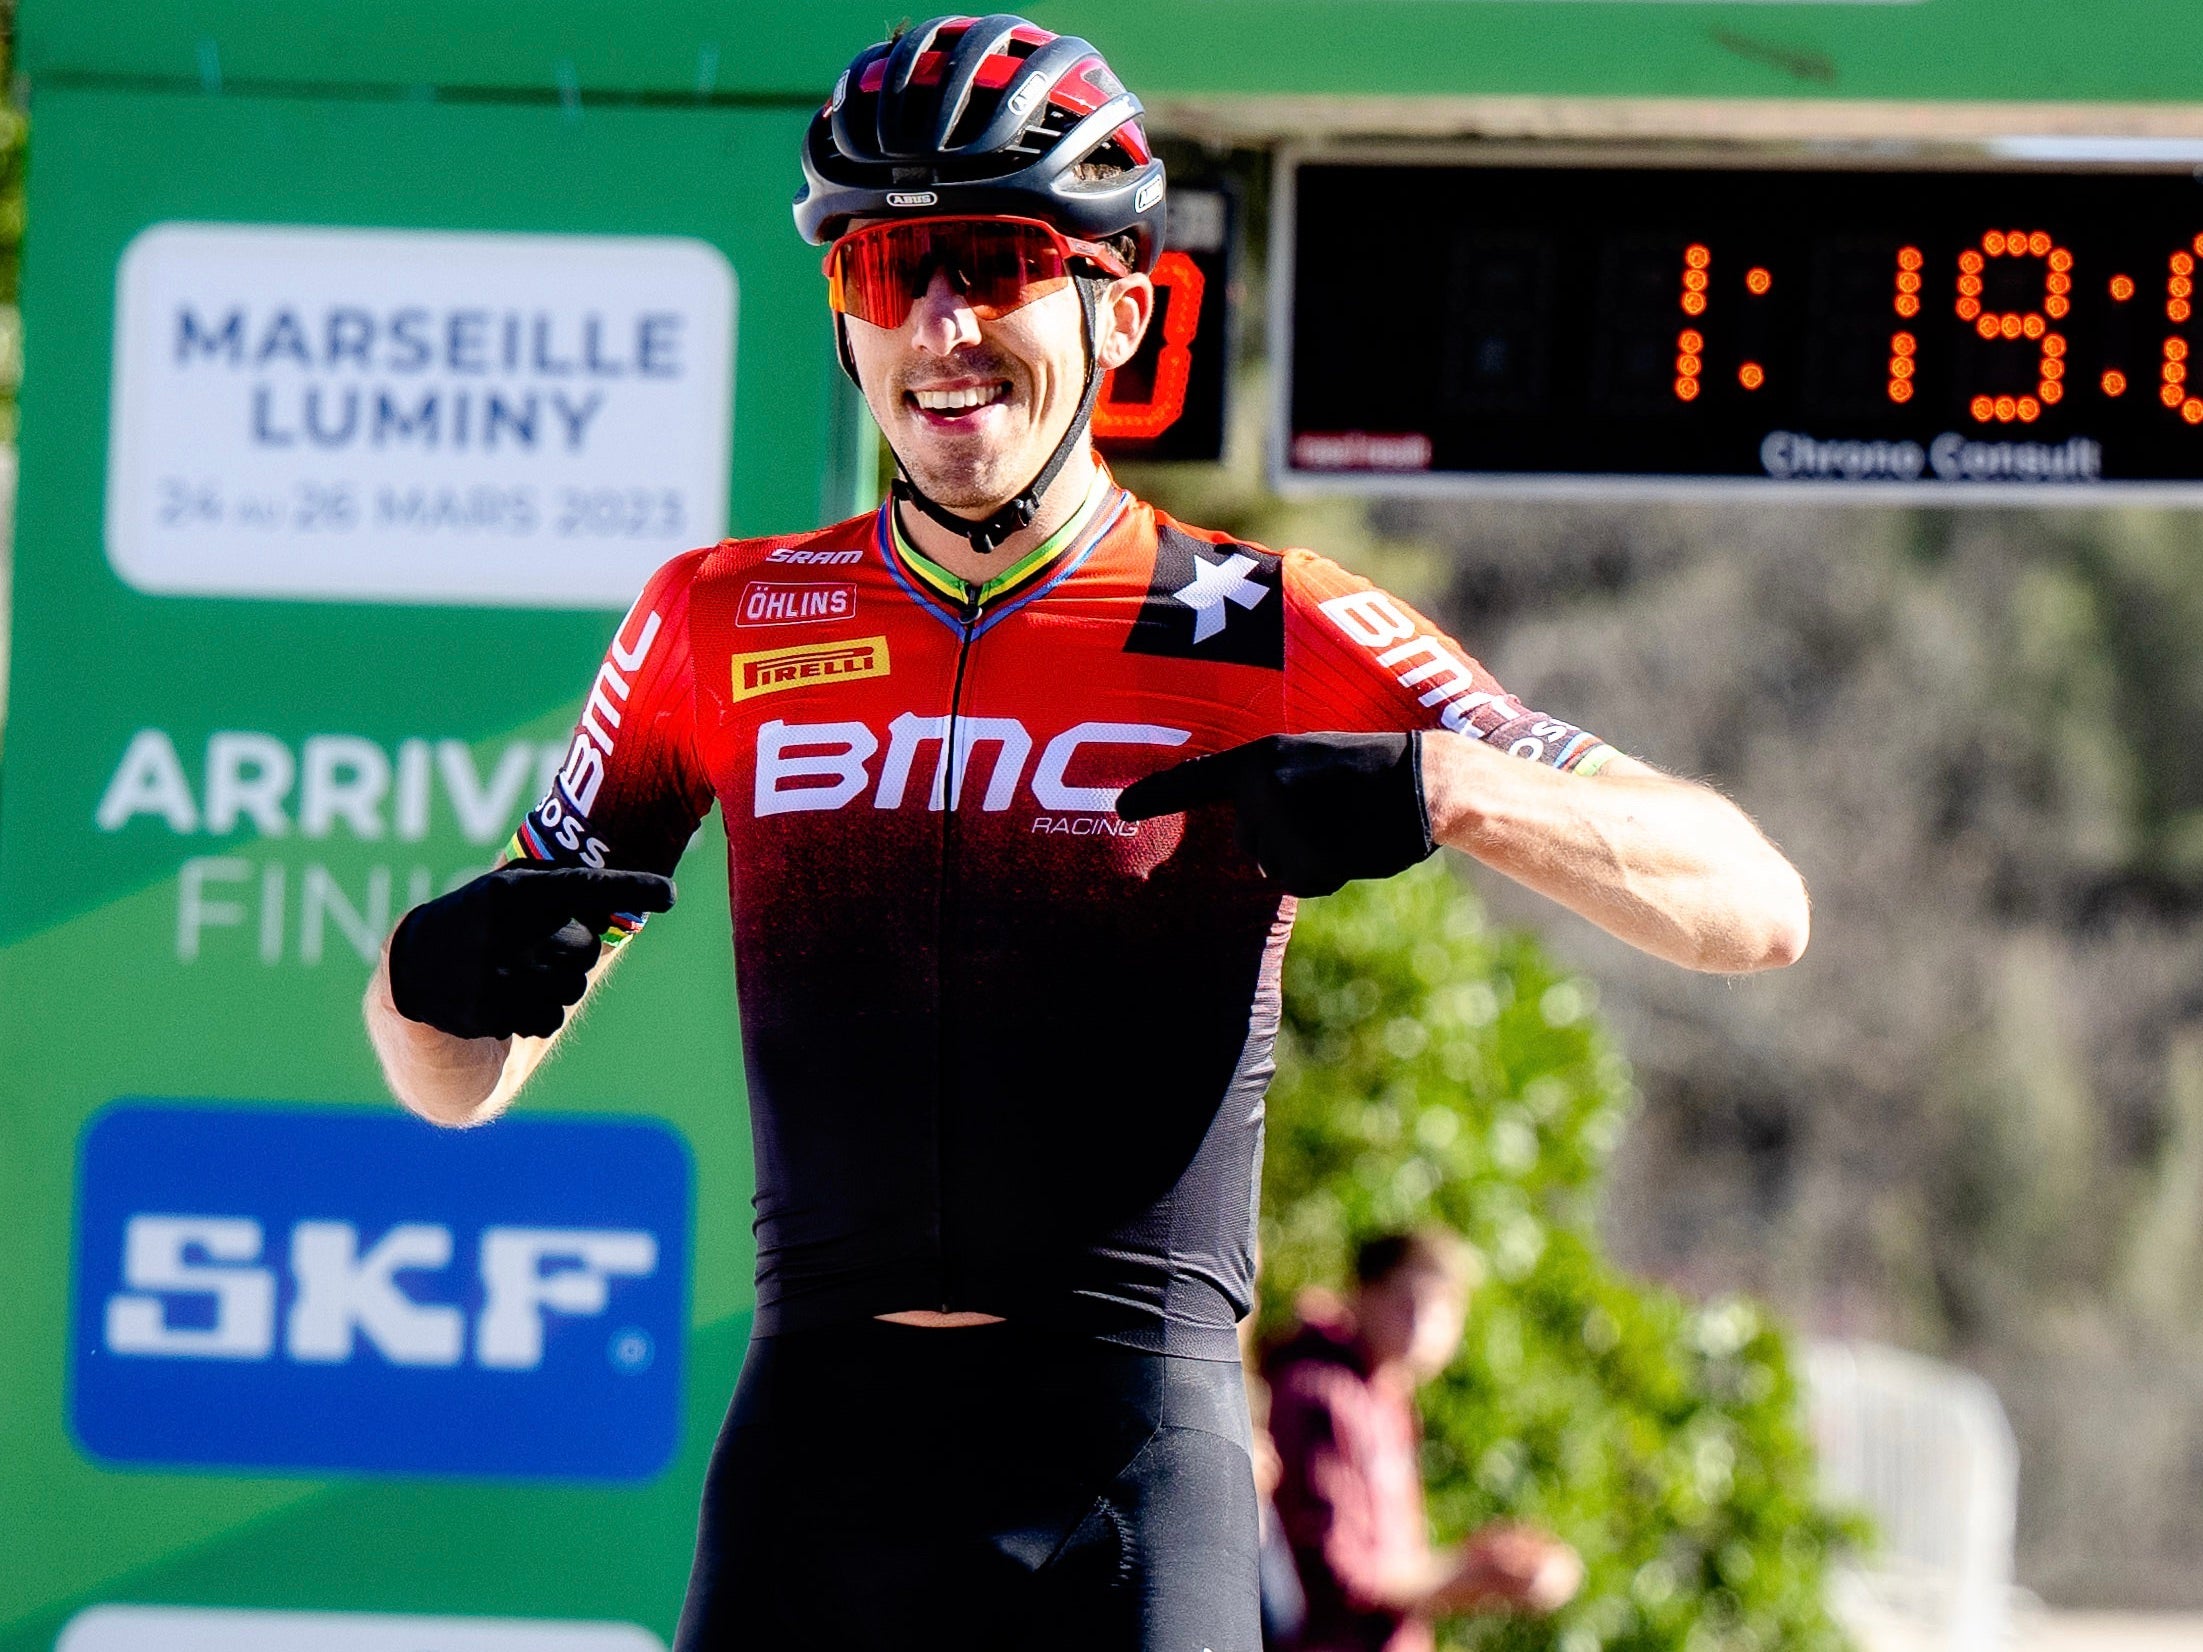 Jordan Sarrou returns to racing with Team BMC in Chur, final preparation race before World Cups